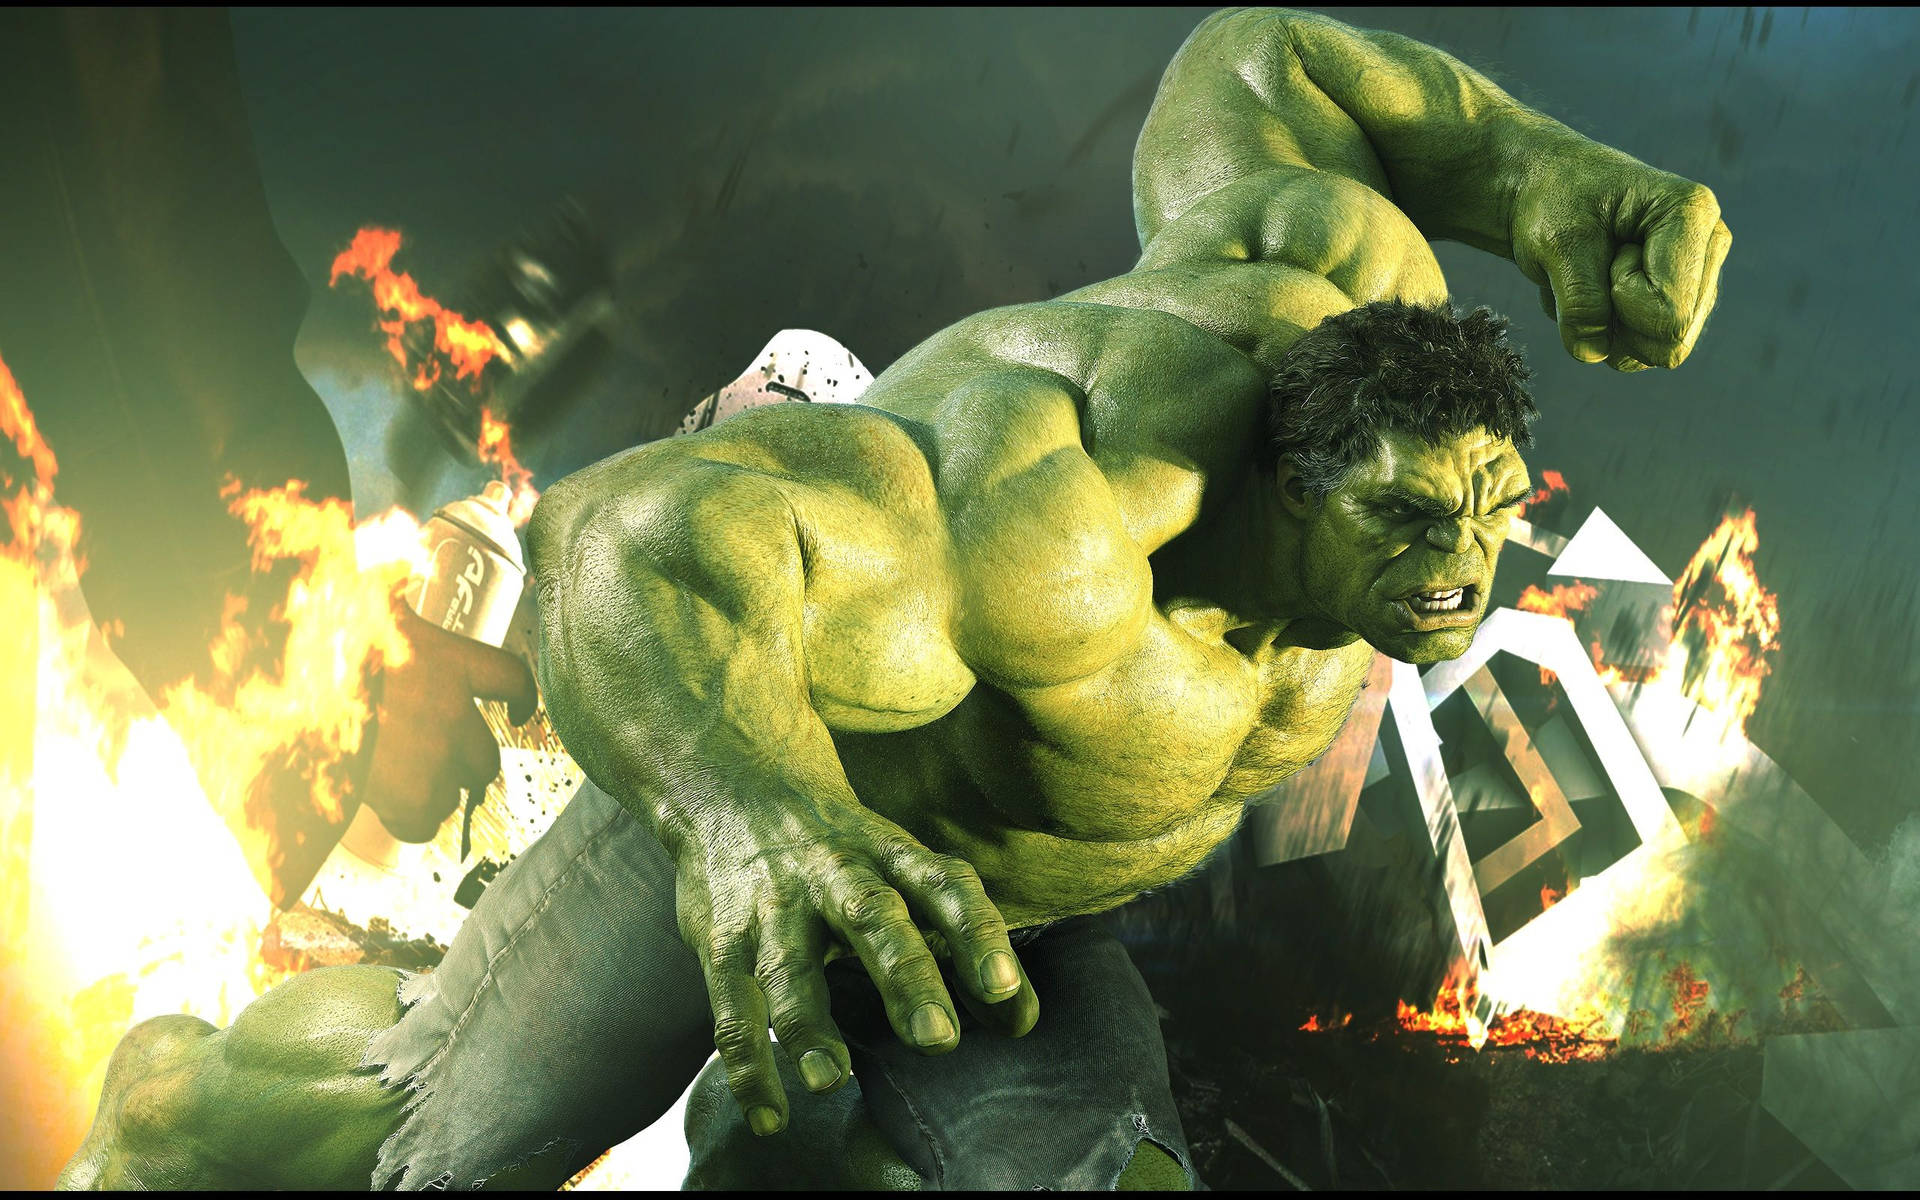 Hulk 2560X1600 Wallpaper and Background Image